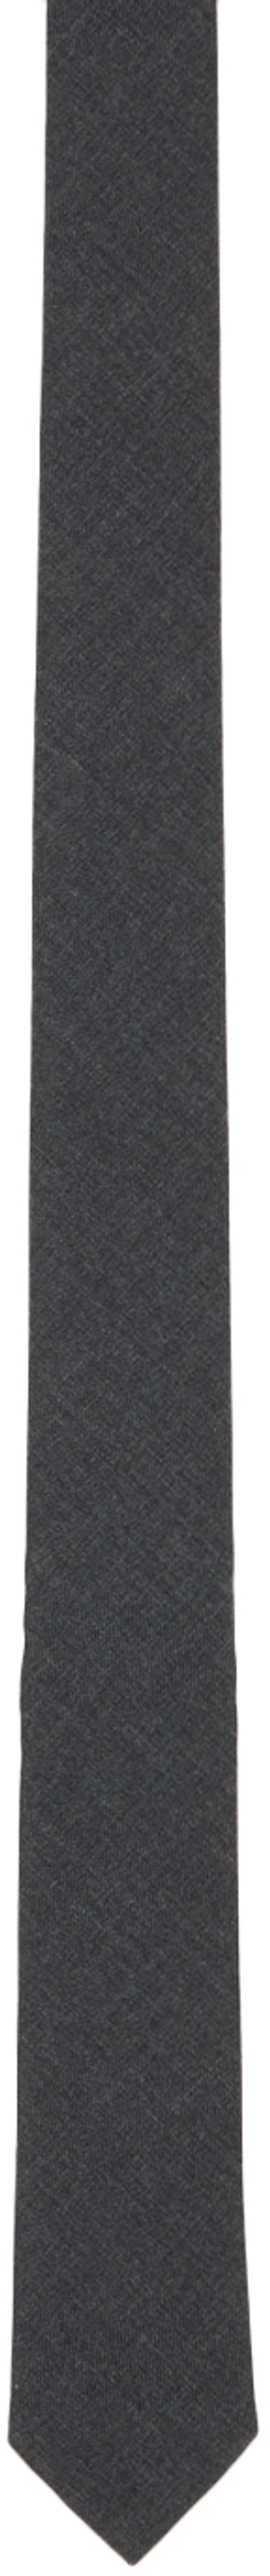 Thom Browne Gray Classic Tie In 025 Dark Grey